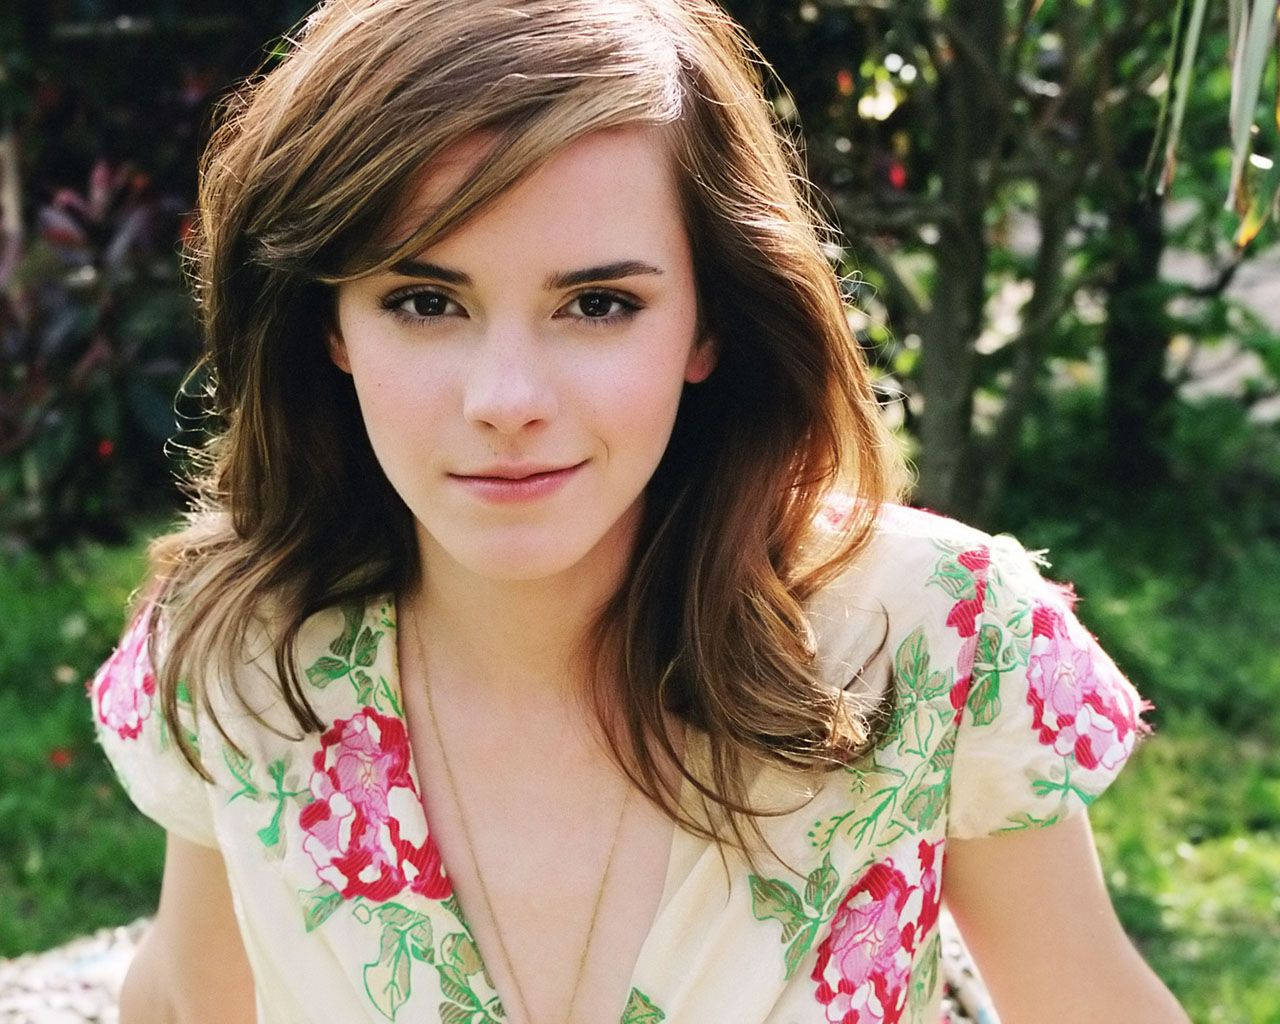 Emma Watson channeling a modern-day princess in a beautiful floral dress Wallpaper